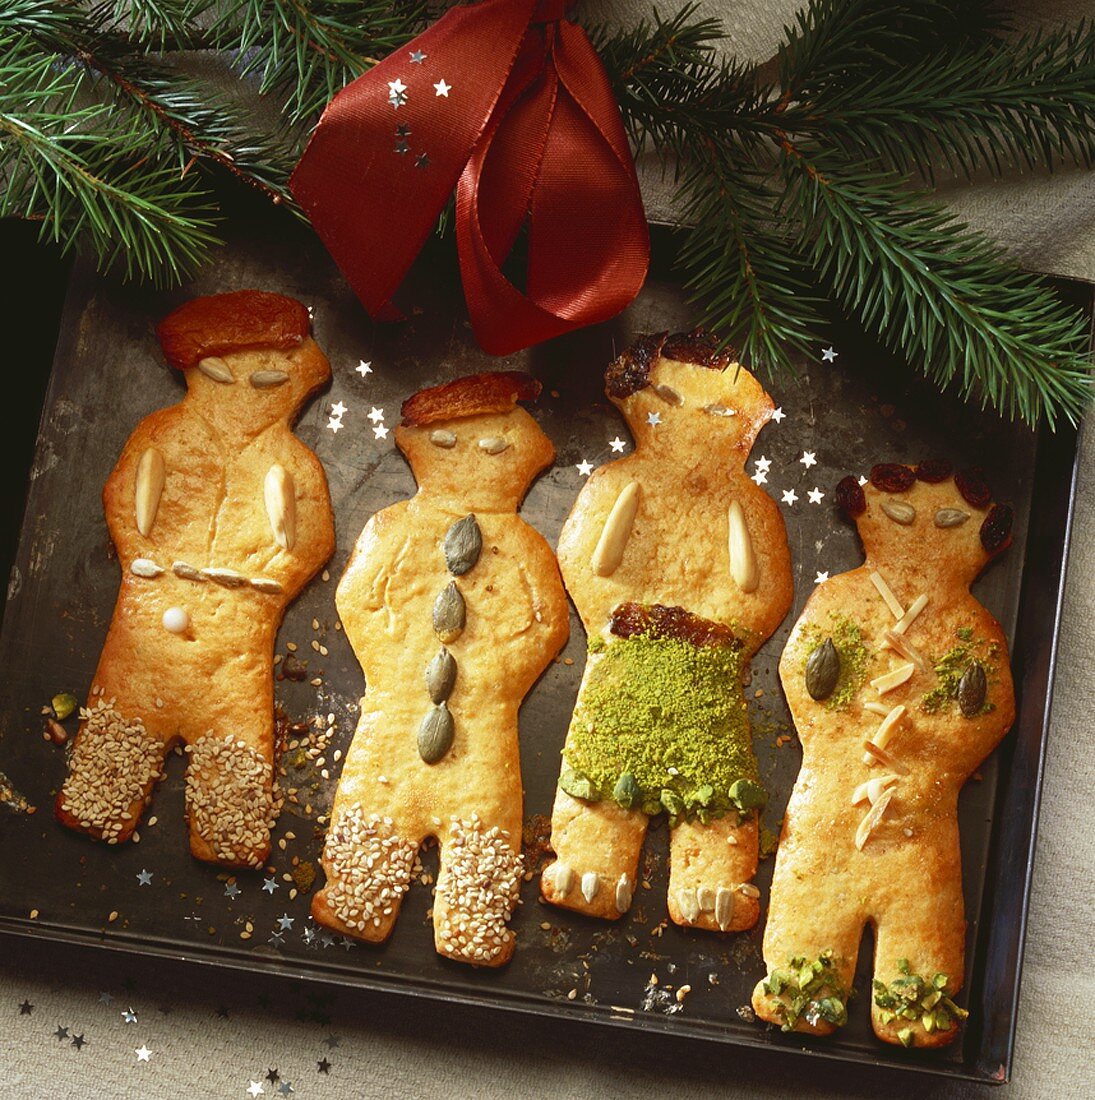 Saxon gingerbread men on a baking tray